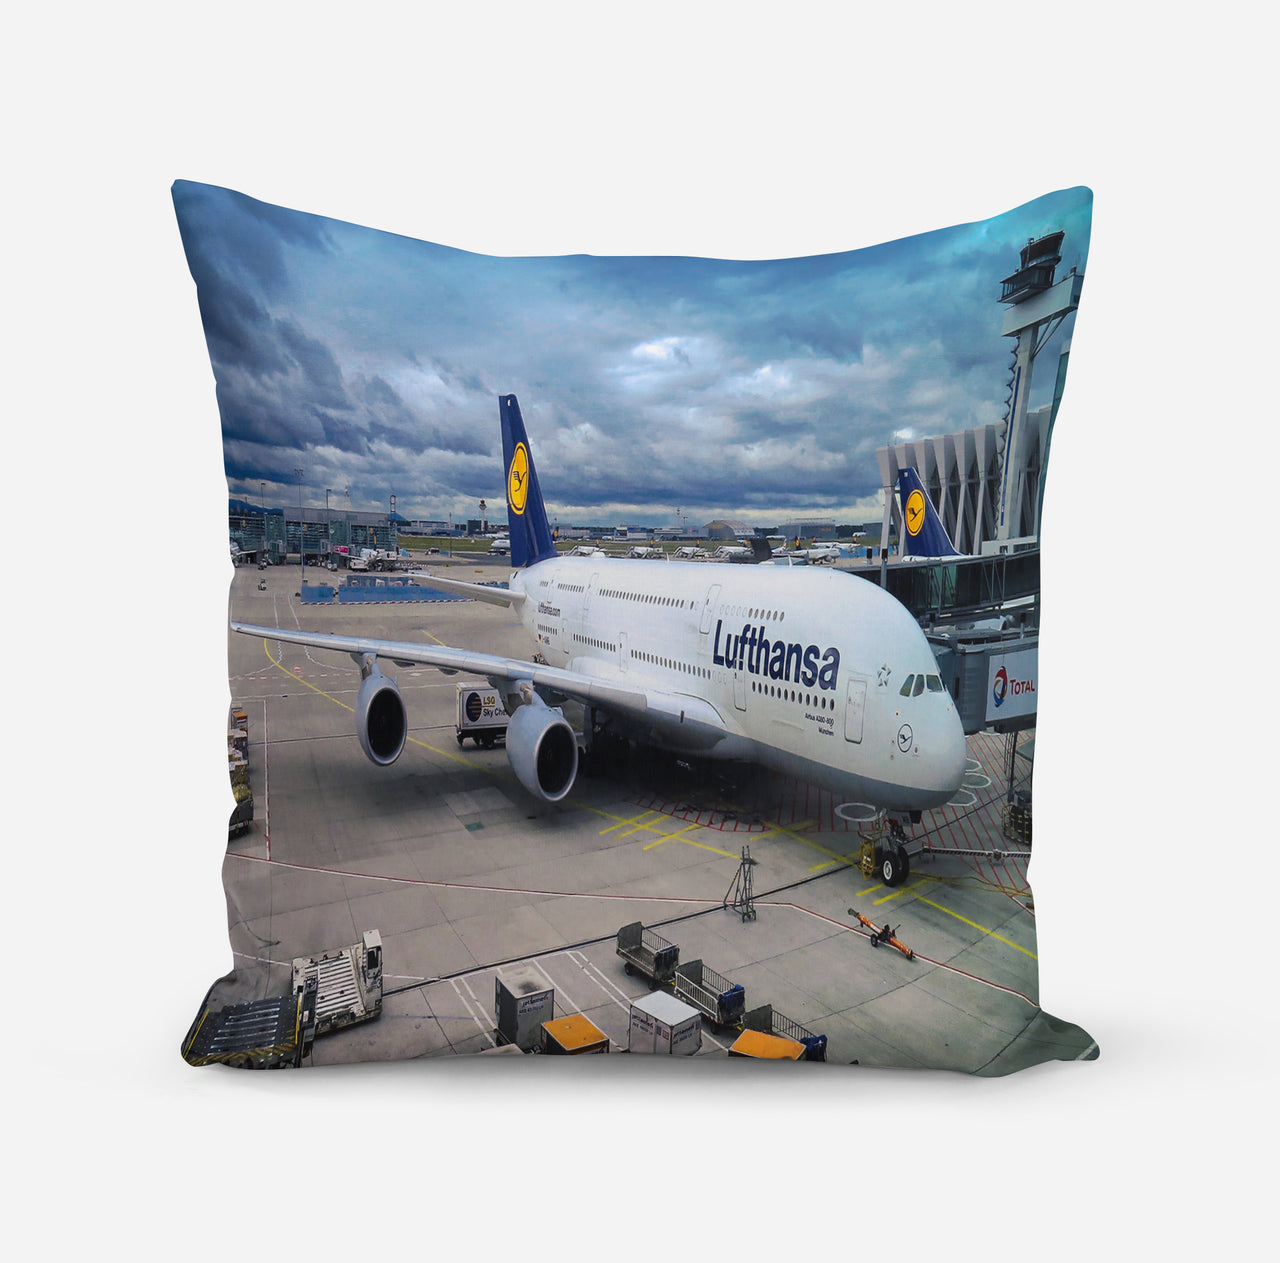 Lufthansa's A380 At the Gate Designed Pillows